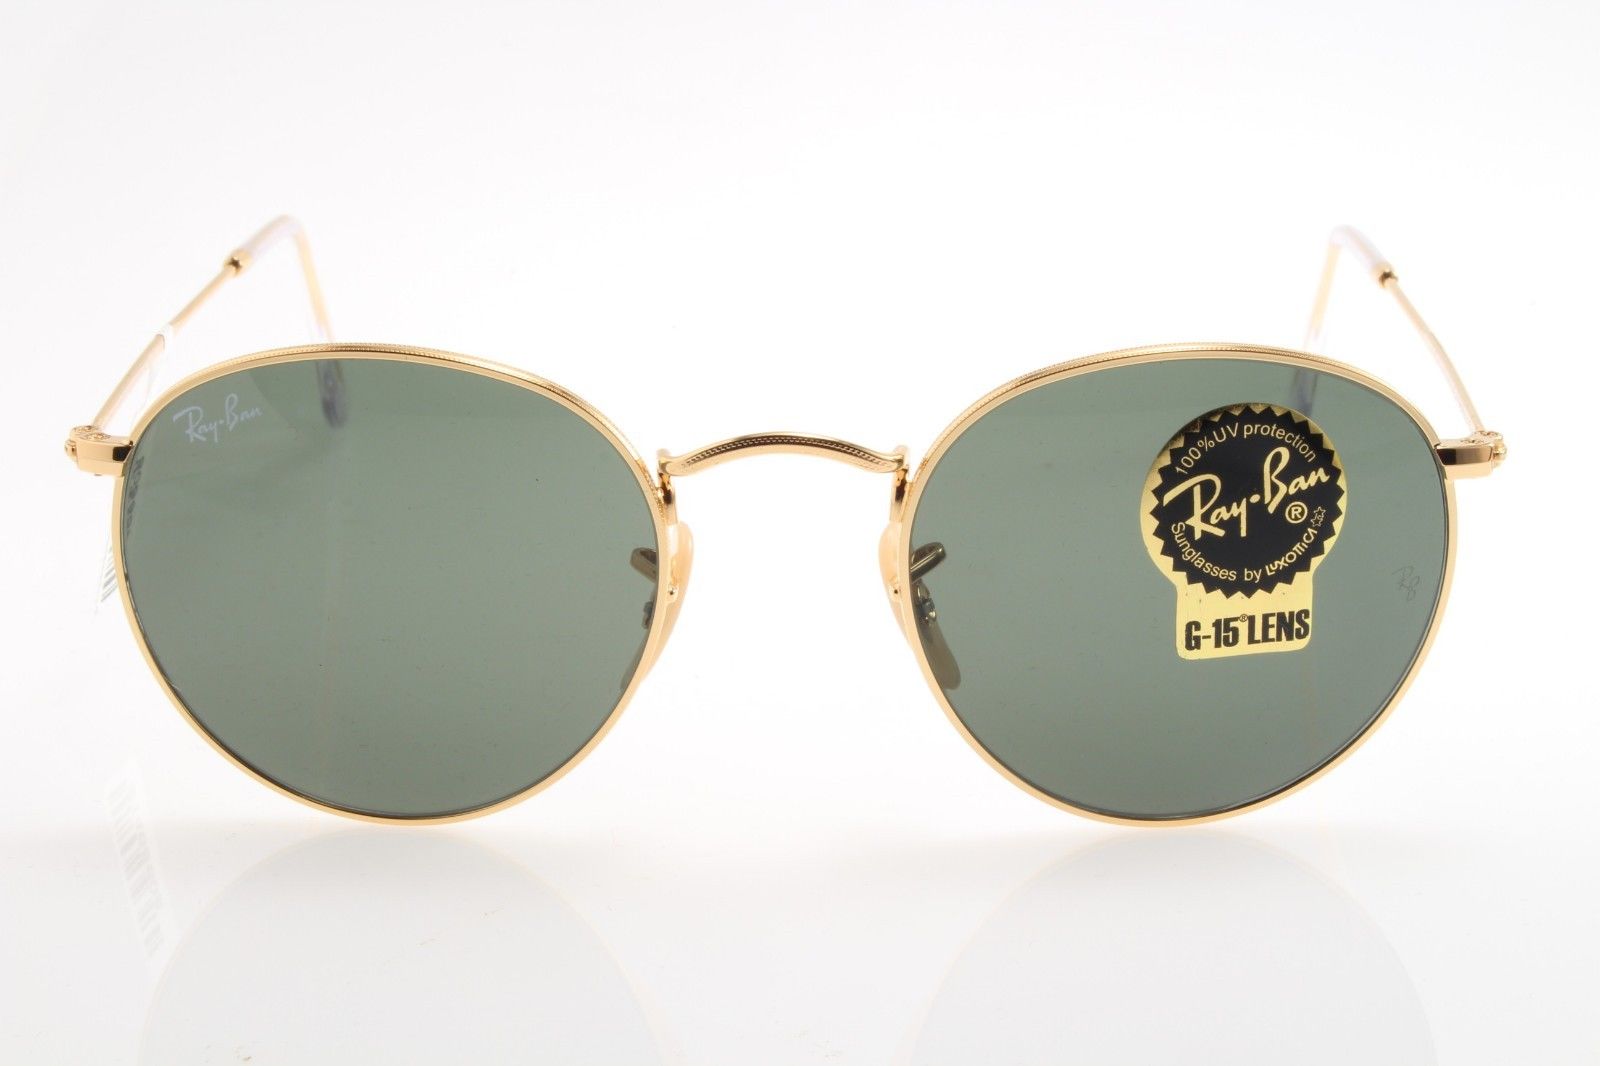 New original sunglasses Ray Ban RB 3447 